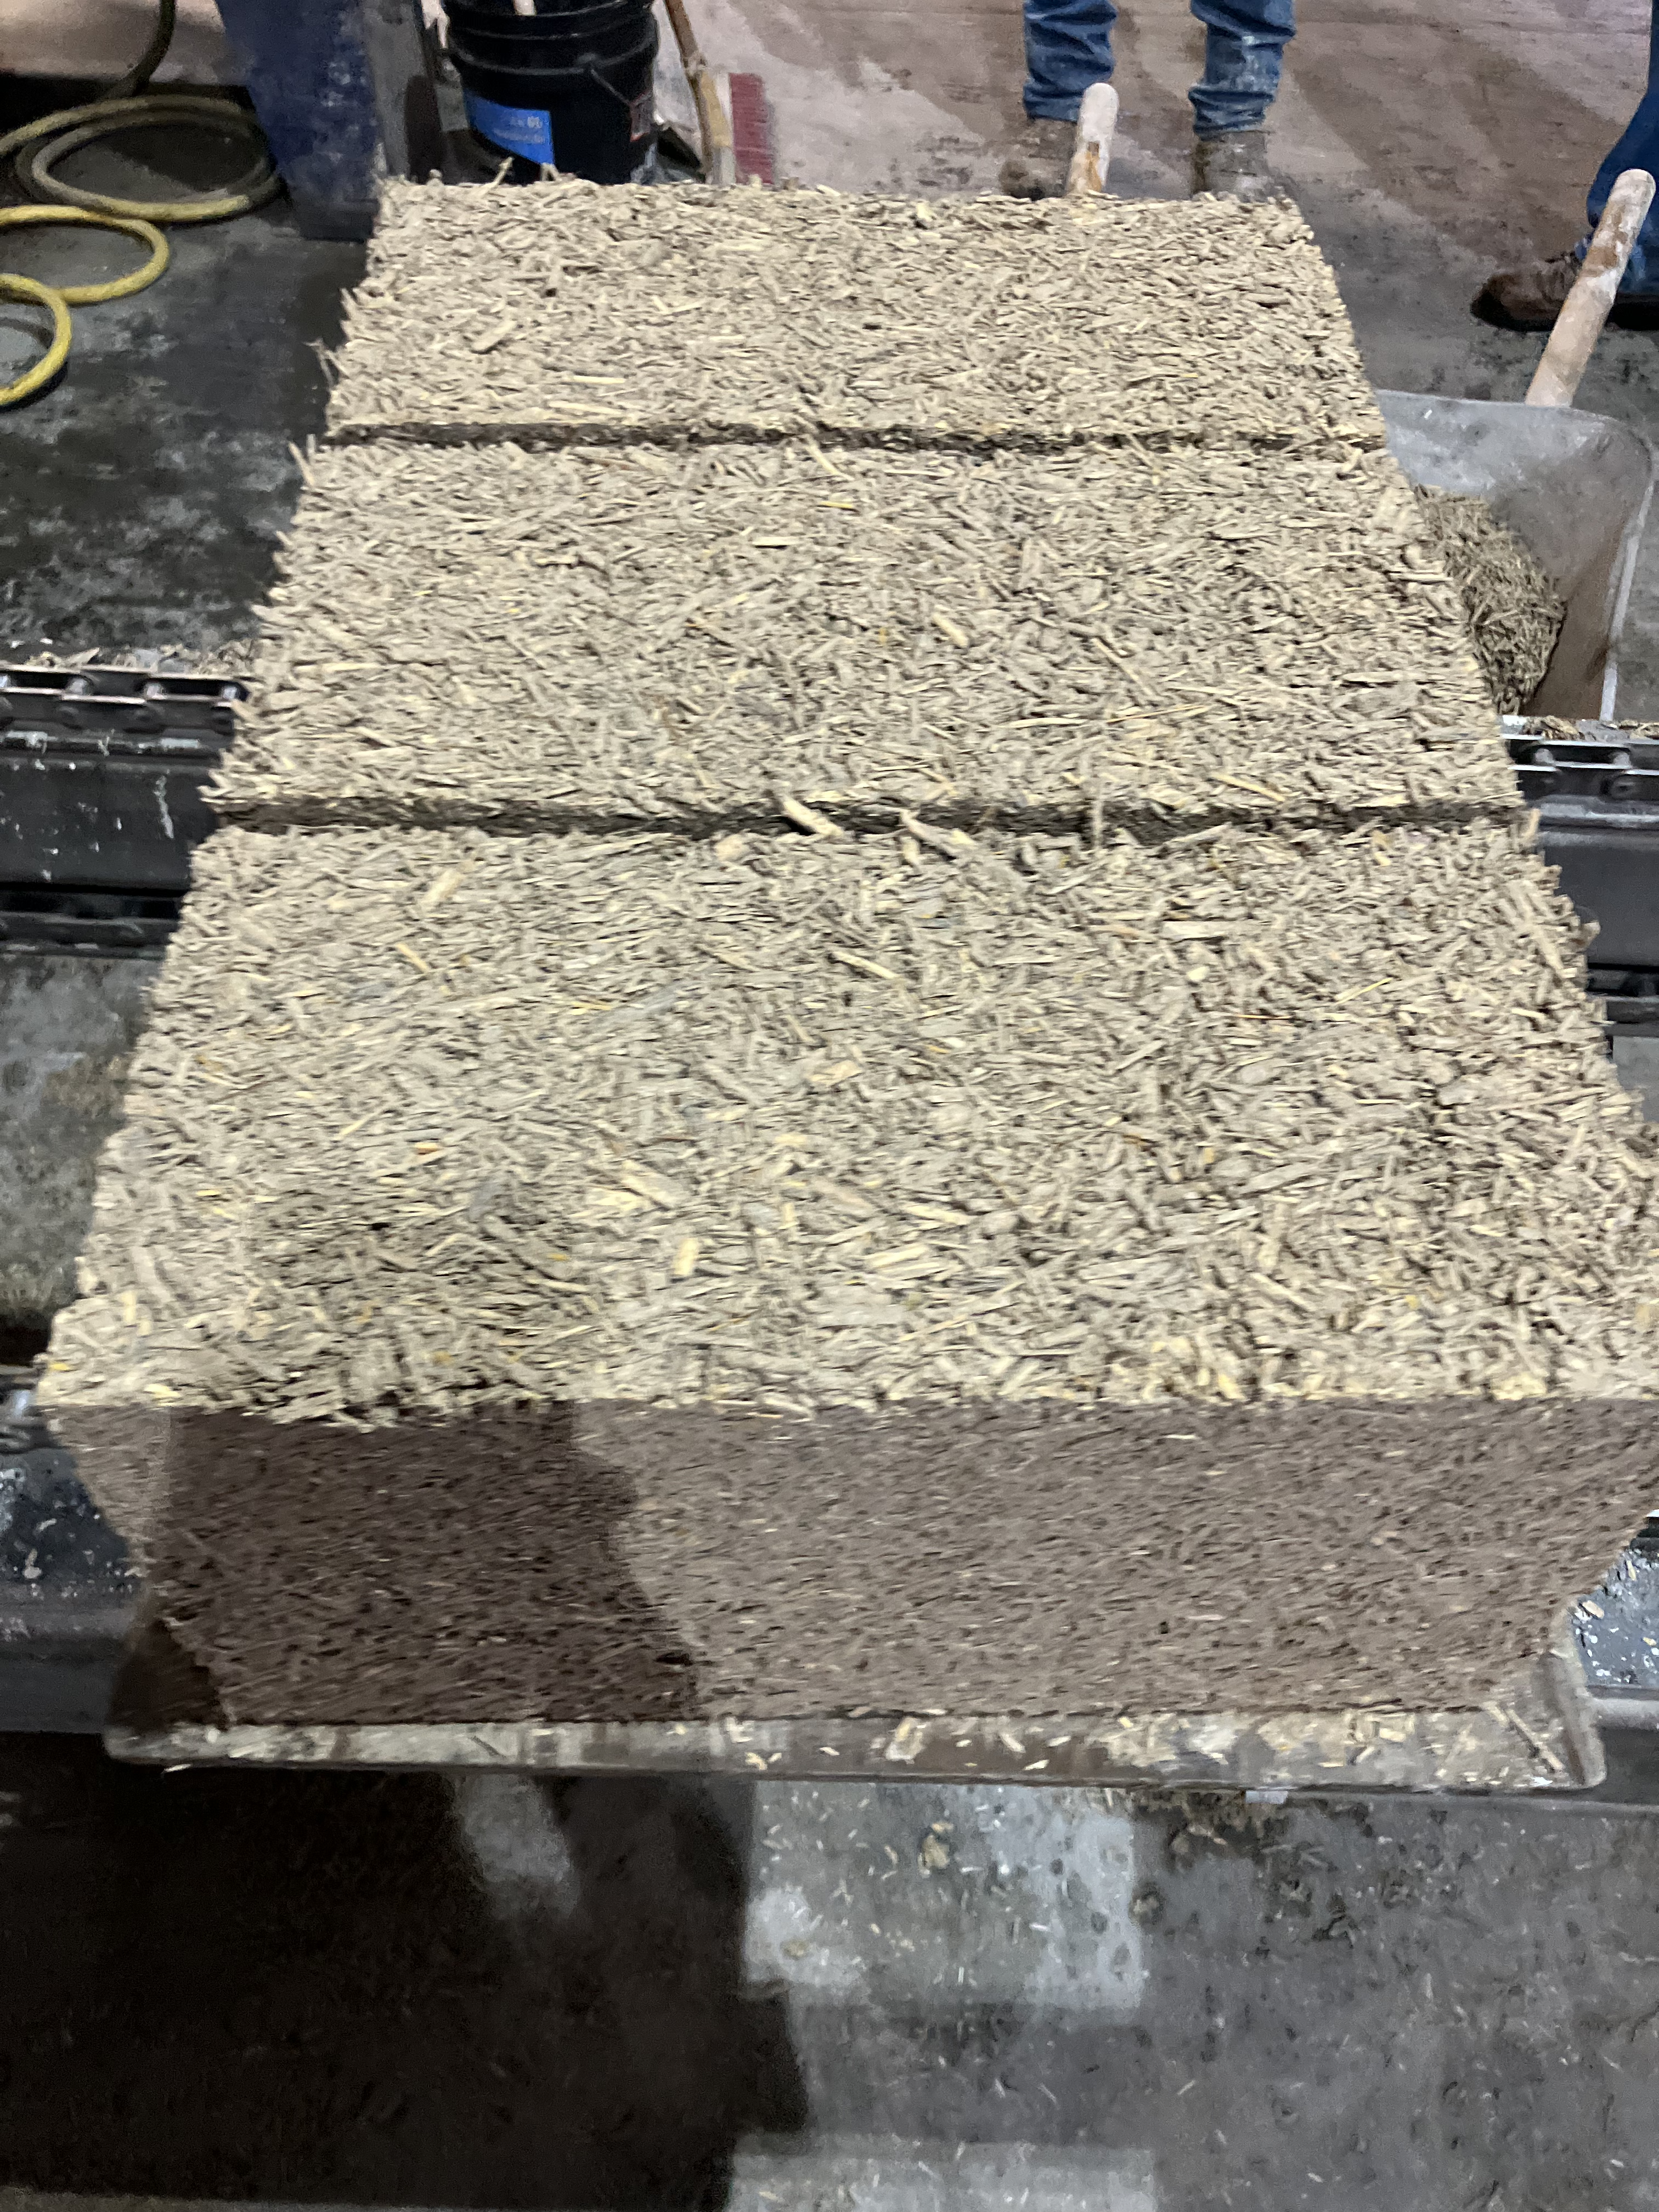 Using hemp to make hemp bricks for your home - Oley Hemp